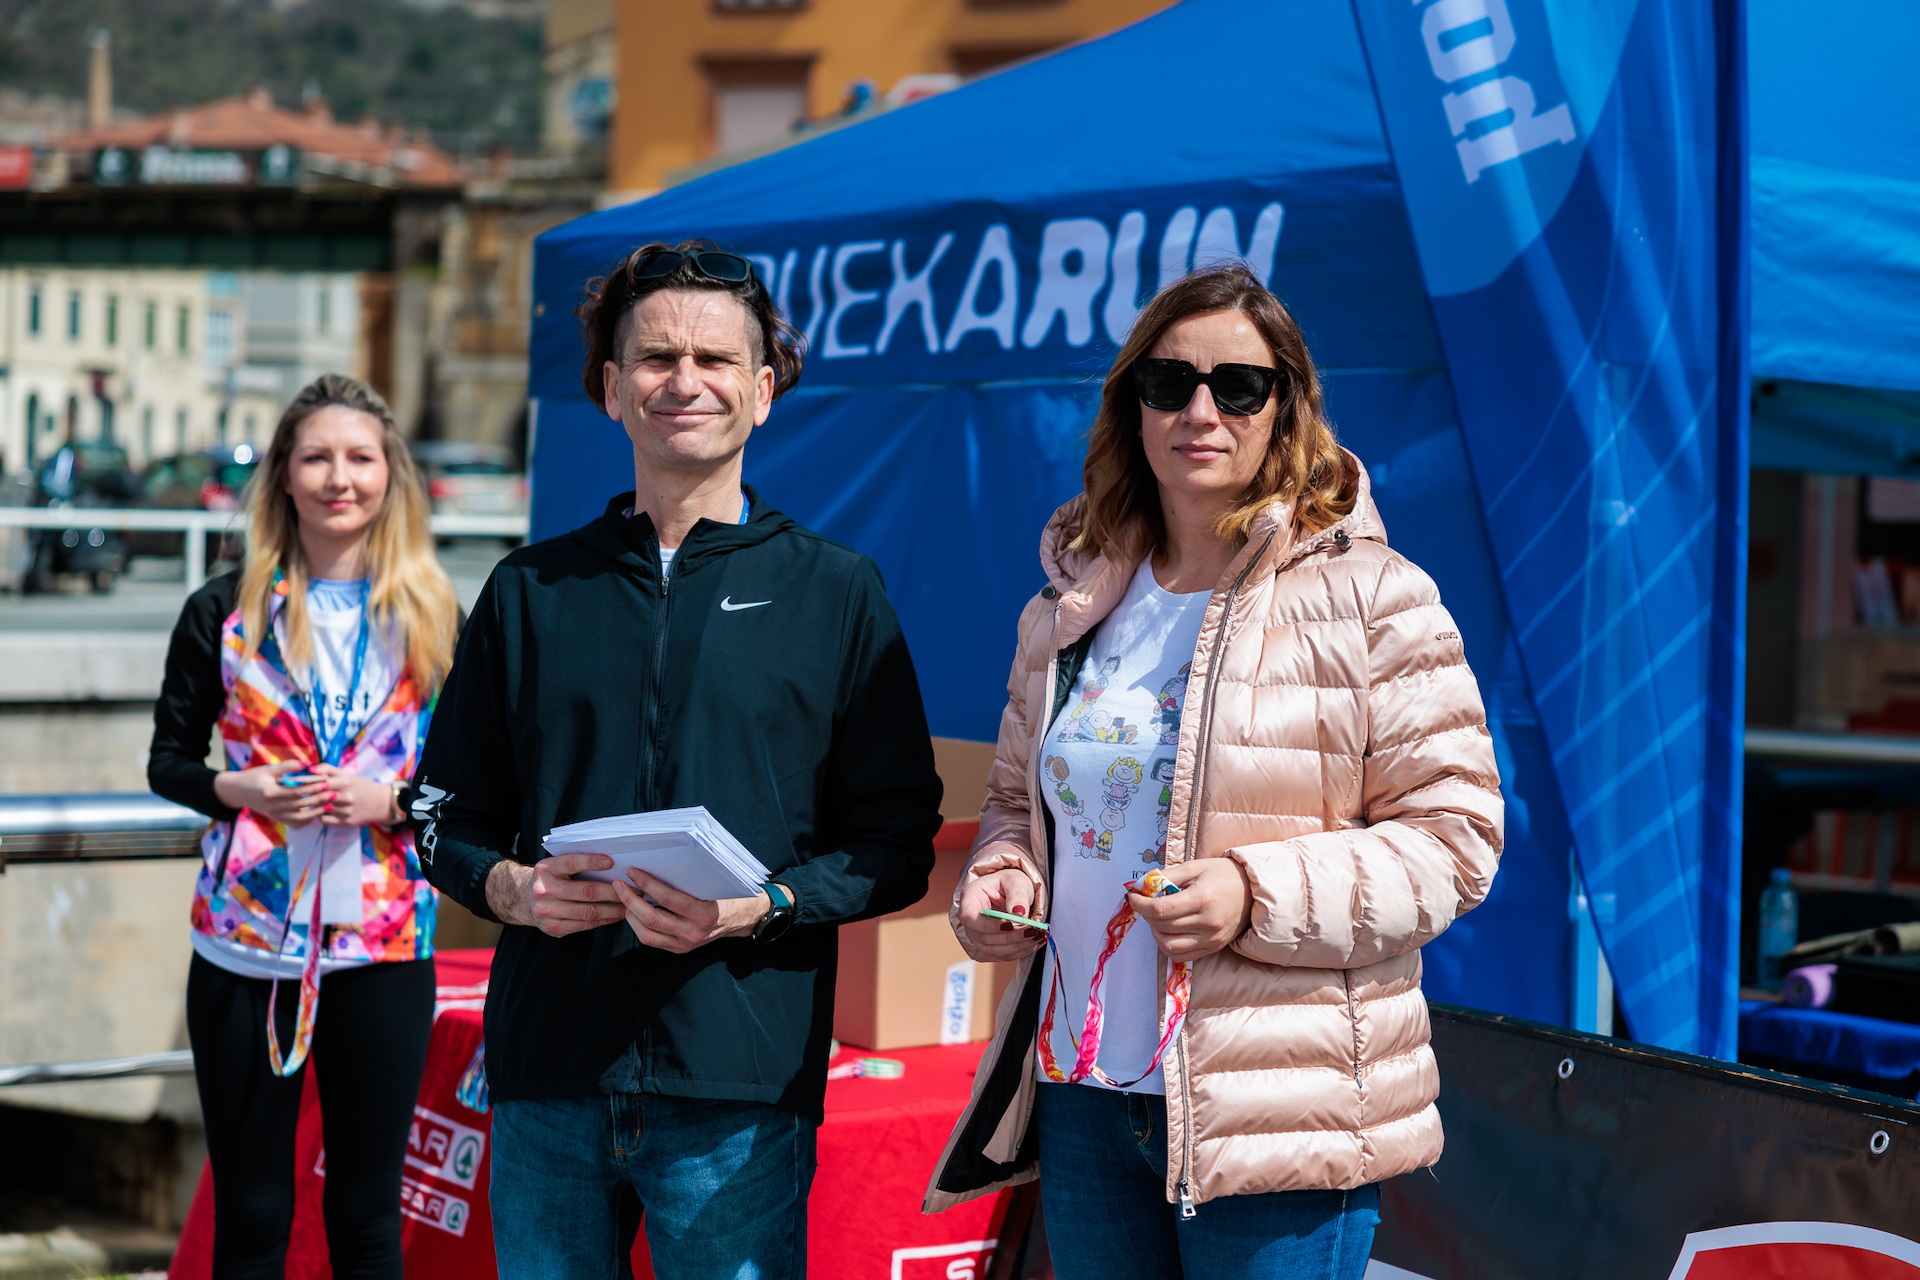 Na utrci 539 skok bili su pročelnica Iva Erceg i Zoran Medved RI Maraton